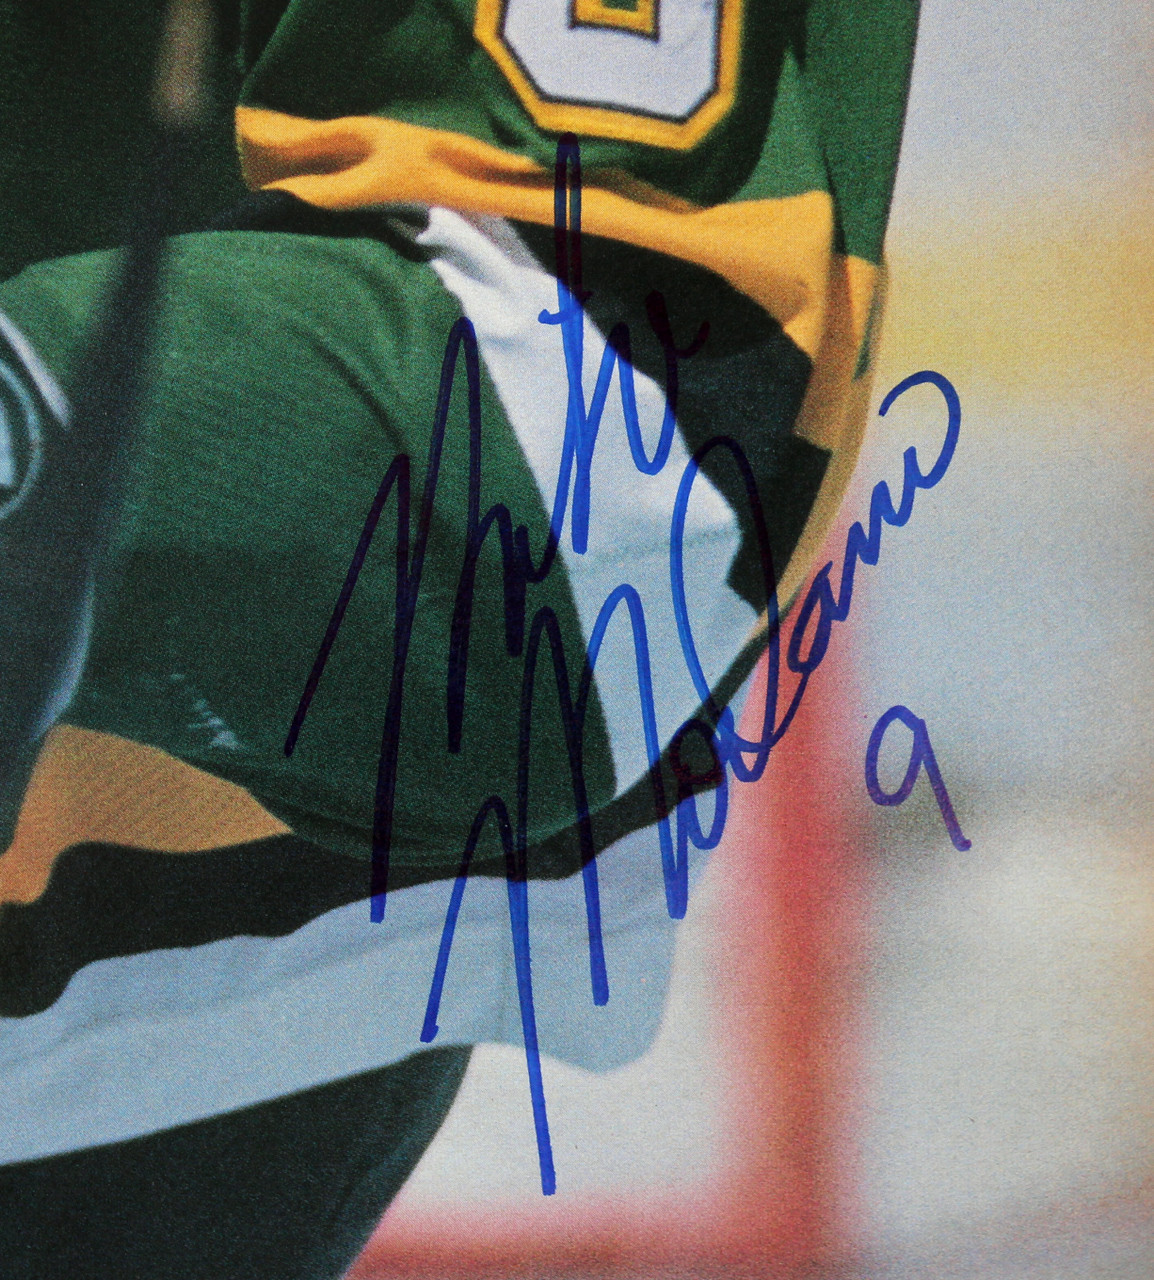 Mike Modano Autographed Hand Signed Custom Minnesota North Stars